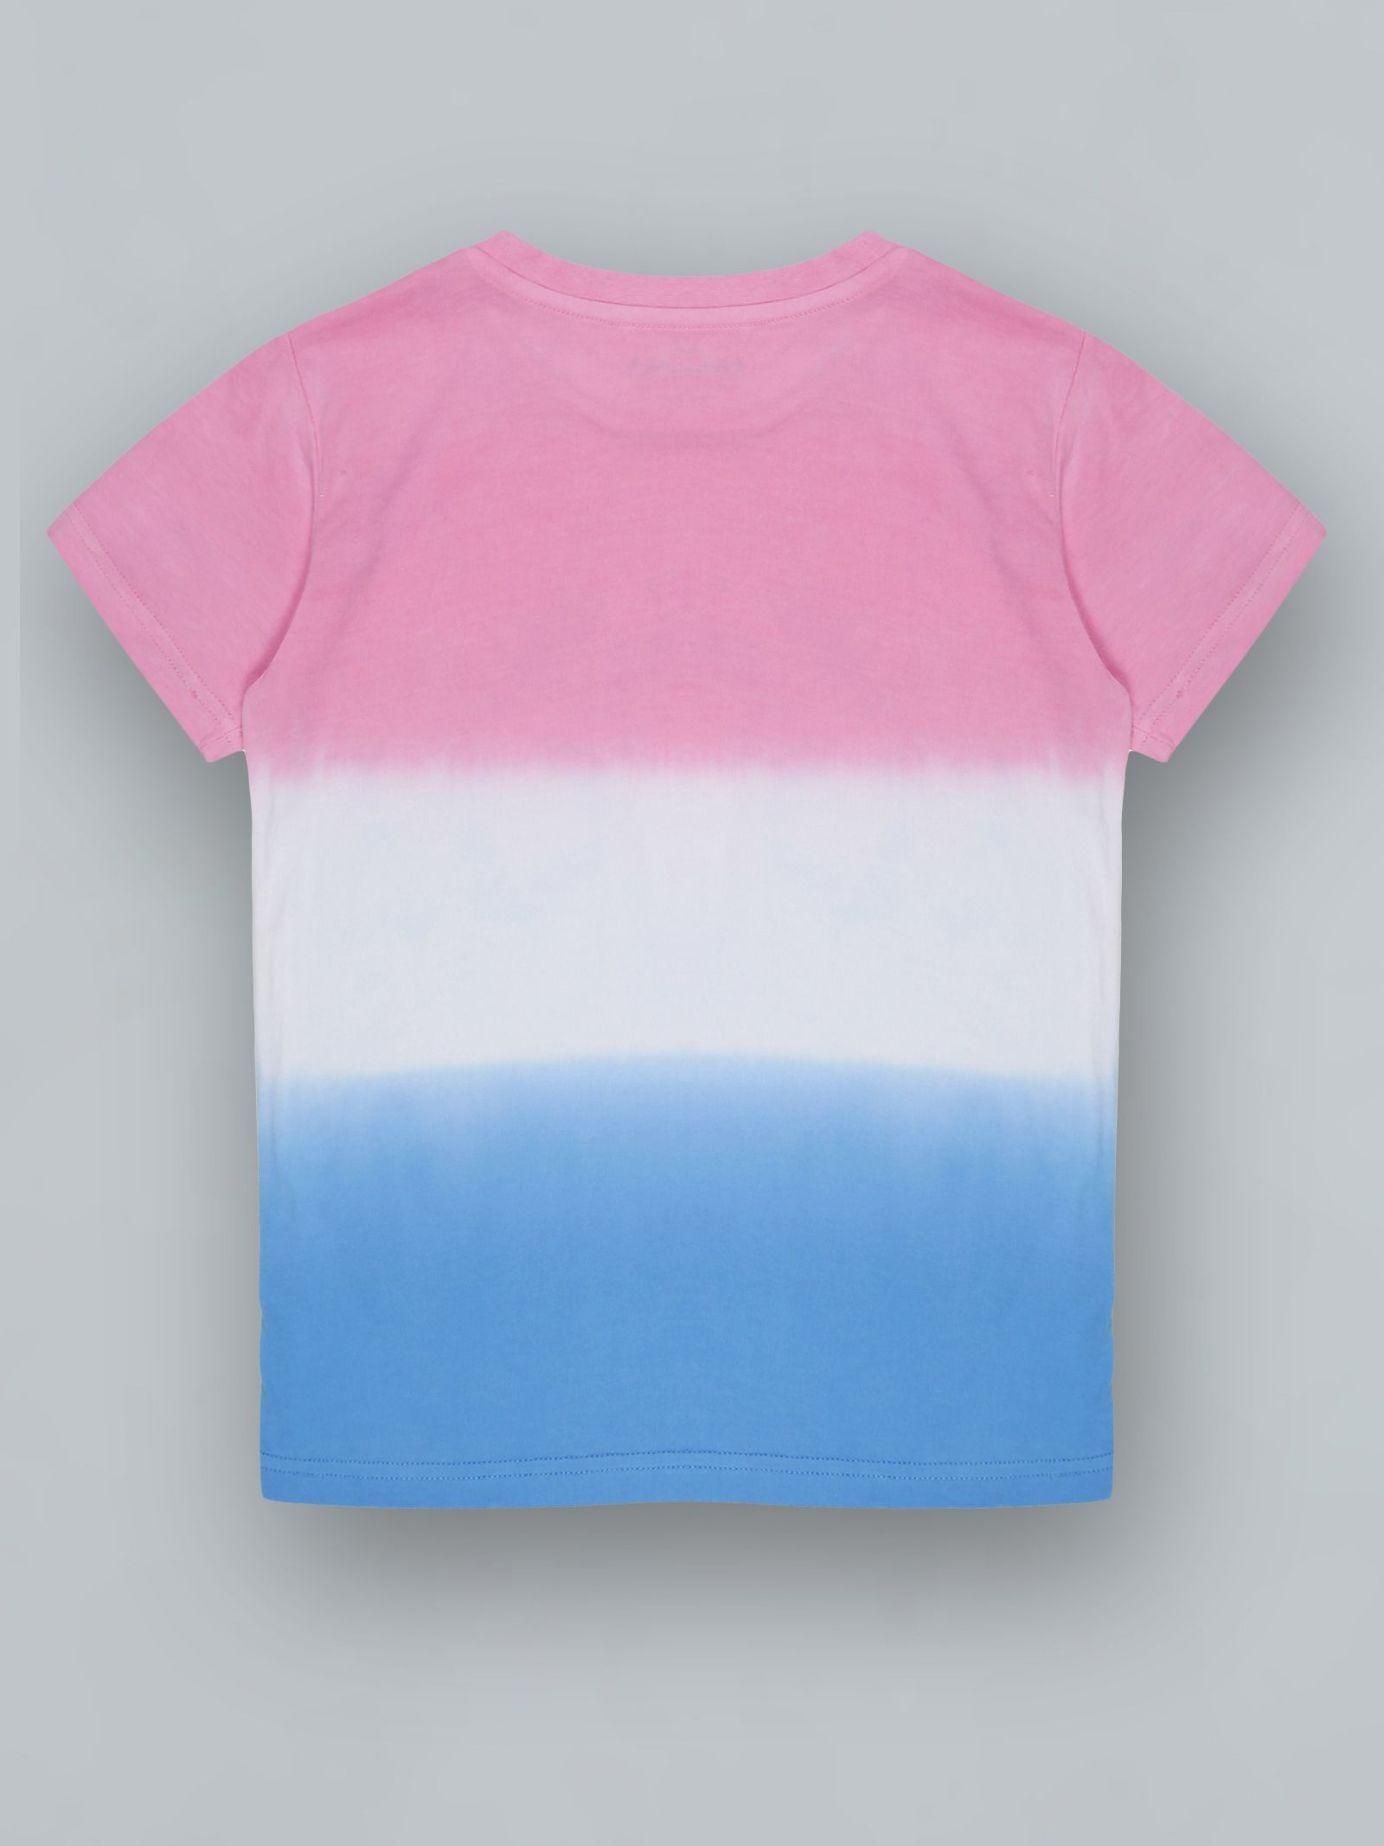 Urgear Kid's Cotton Color Block Short Sleeves T-shirt